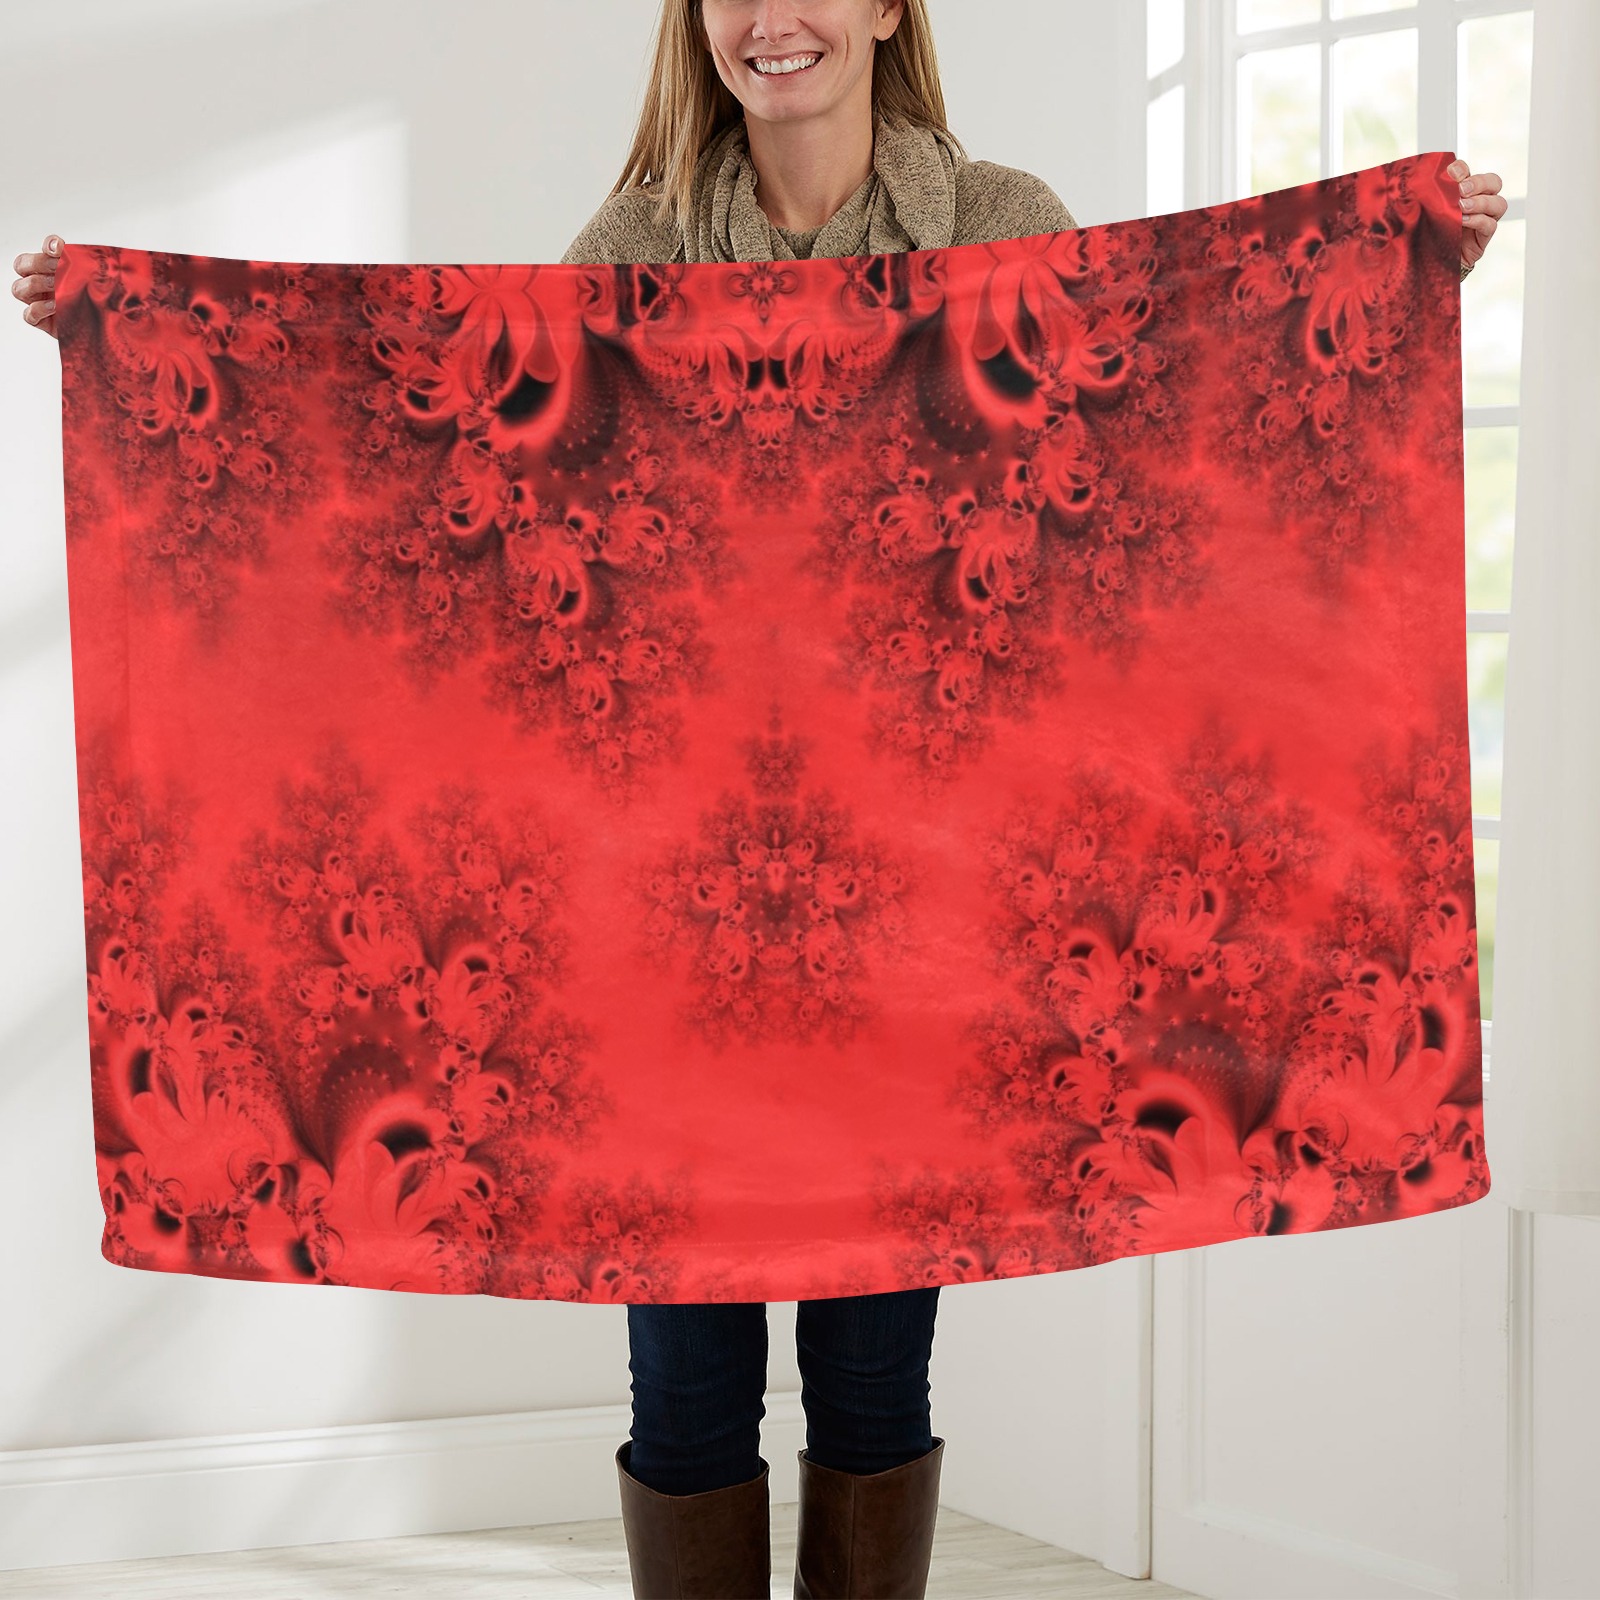 Autumn Reds in the Garden Frost Fractal Baby Blanket 40"x50"